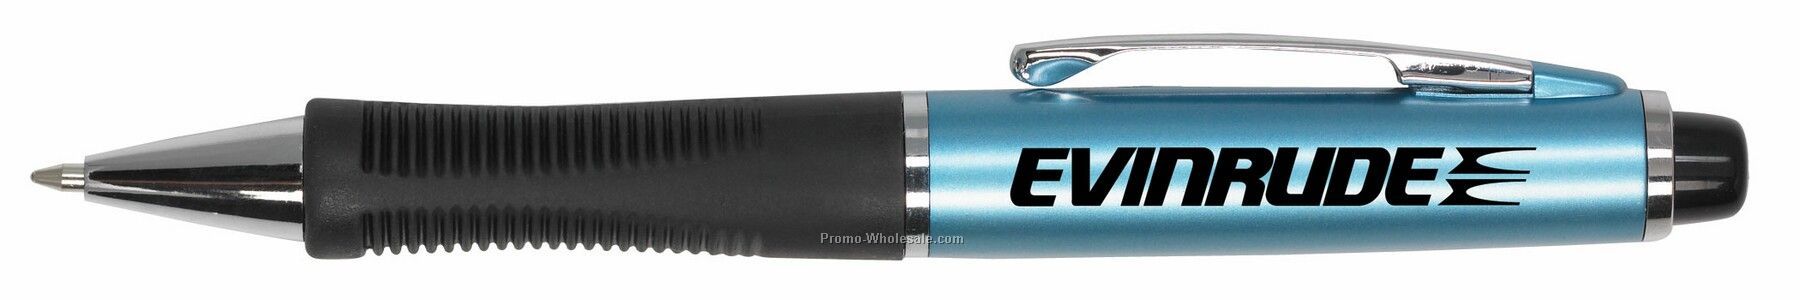 Neptune Ergonomic Grip Pen With Metallic Barrel